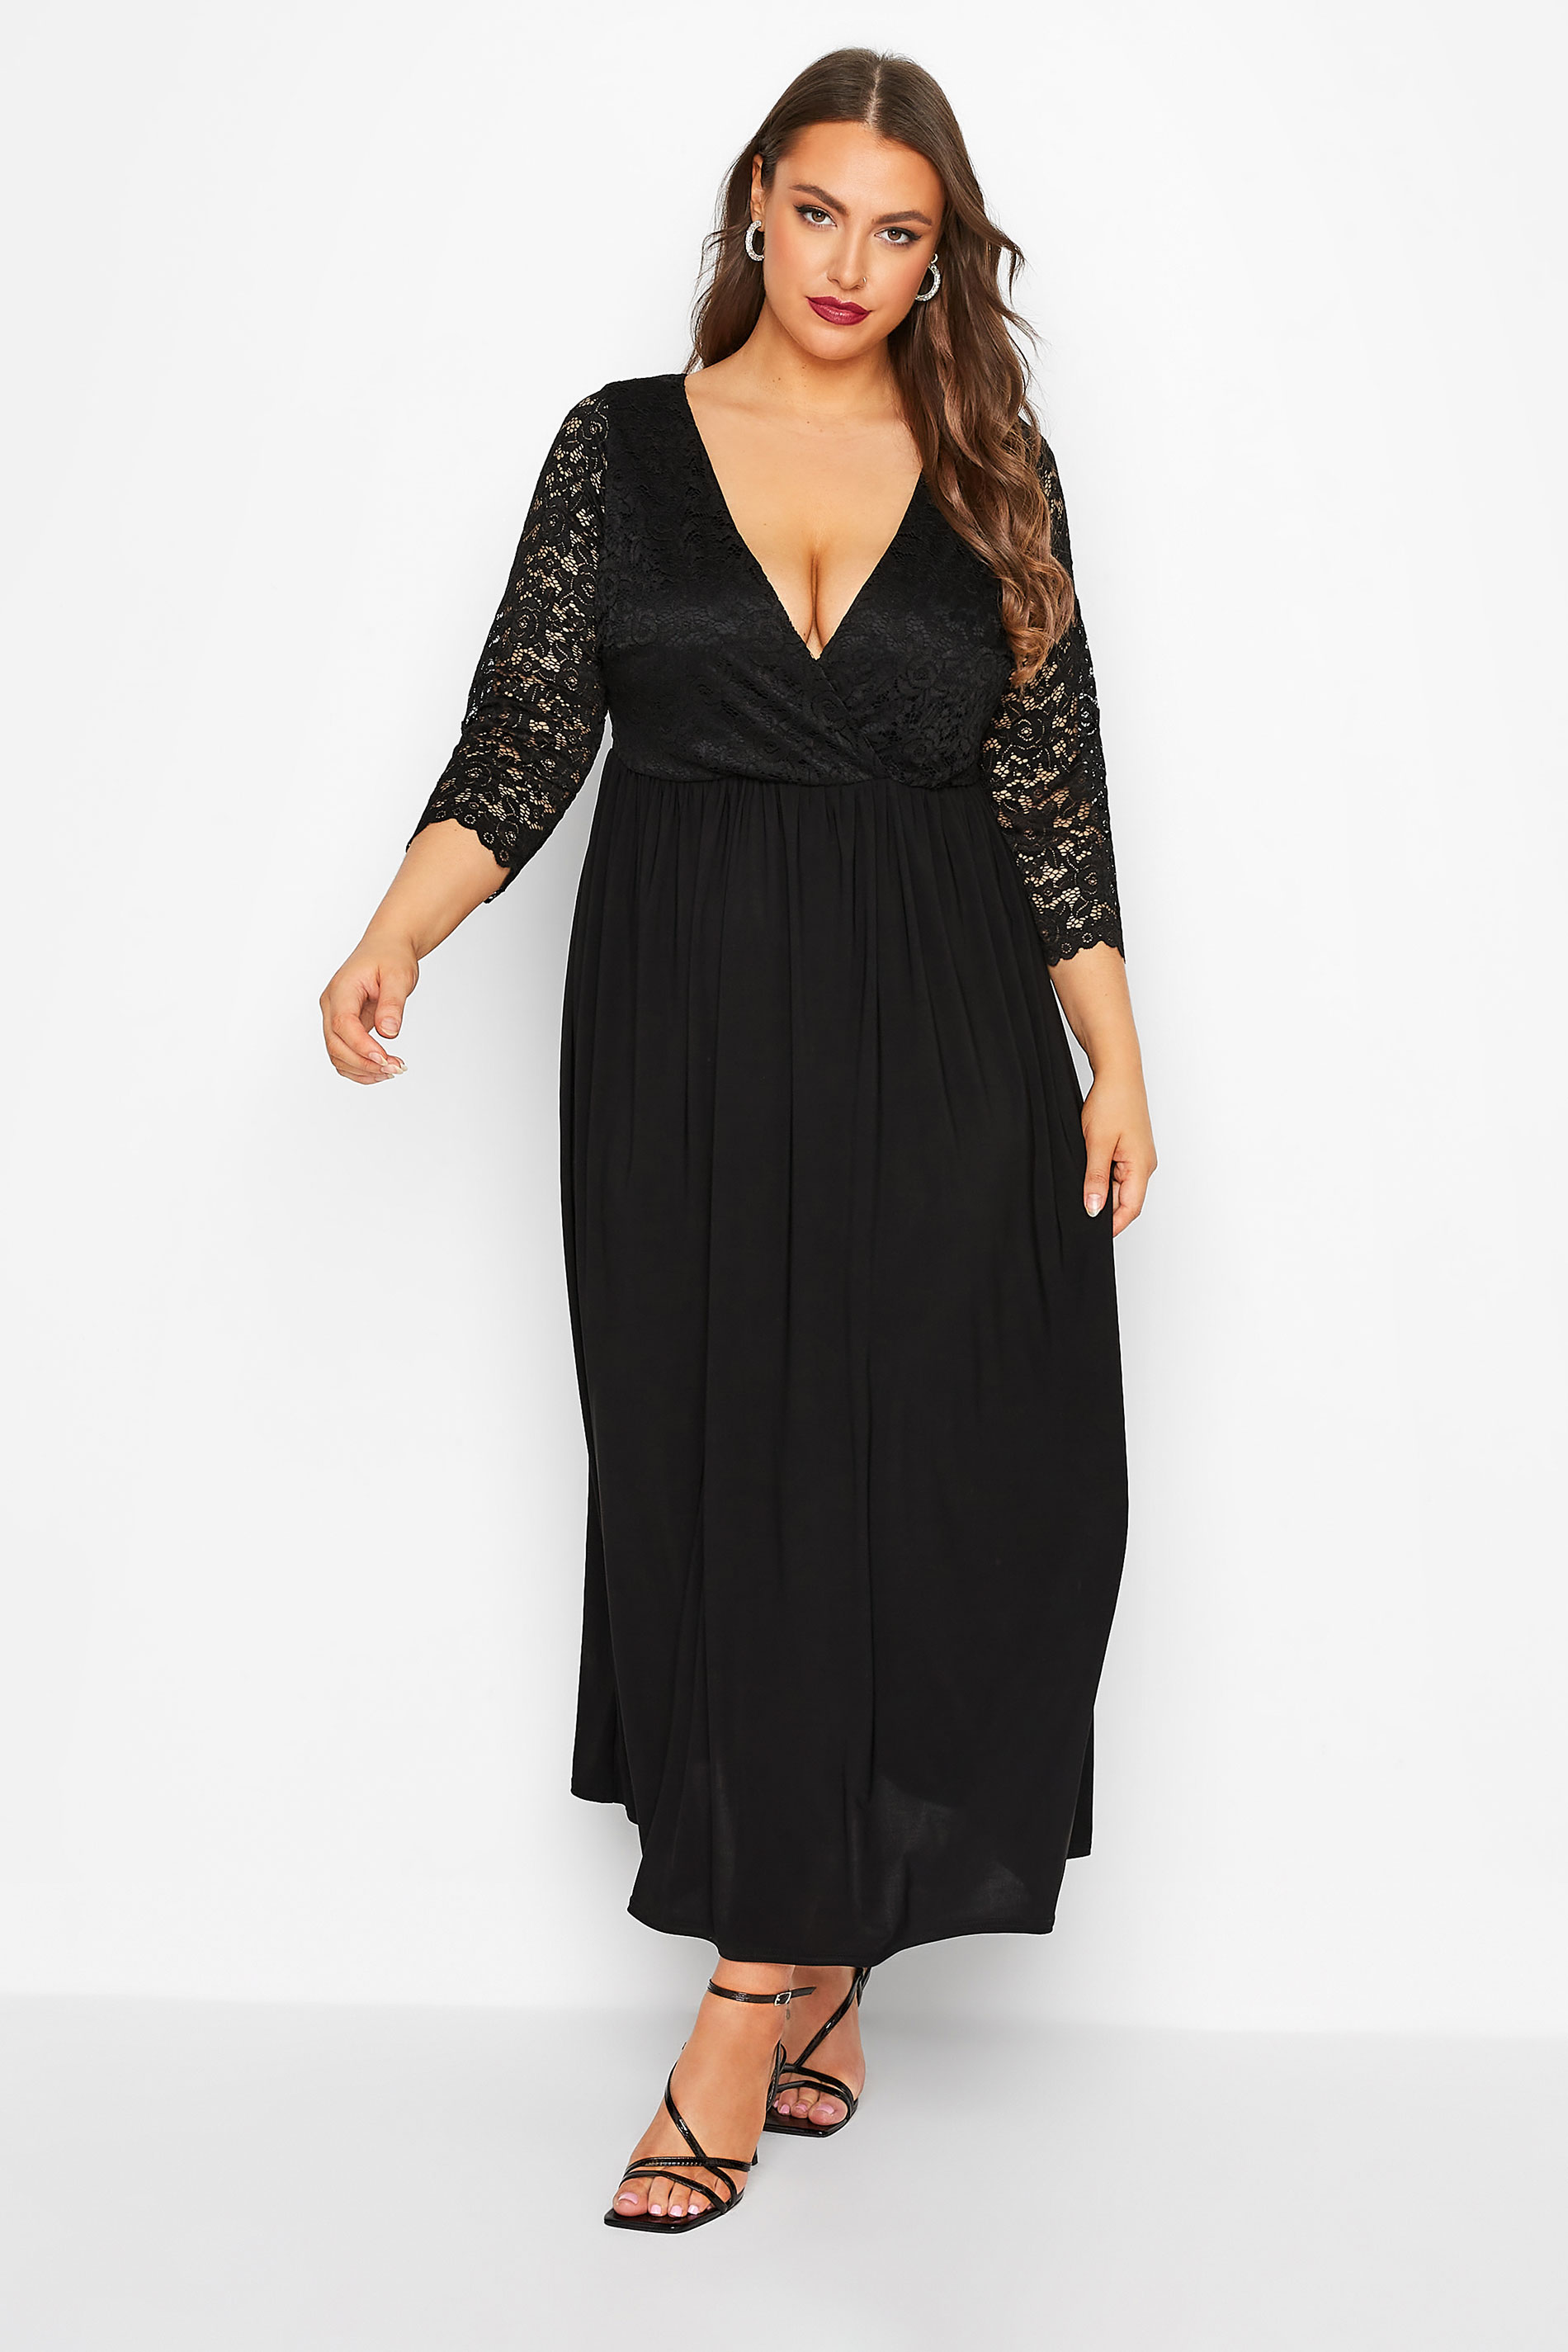 YOURS LONDON Plus Size Black Lace Wrap Maxi Dress | Yours Clothing 1